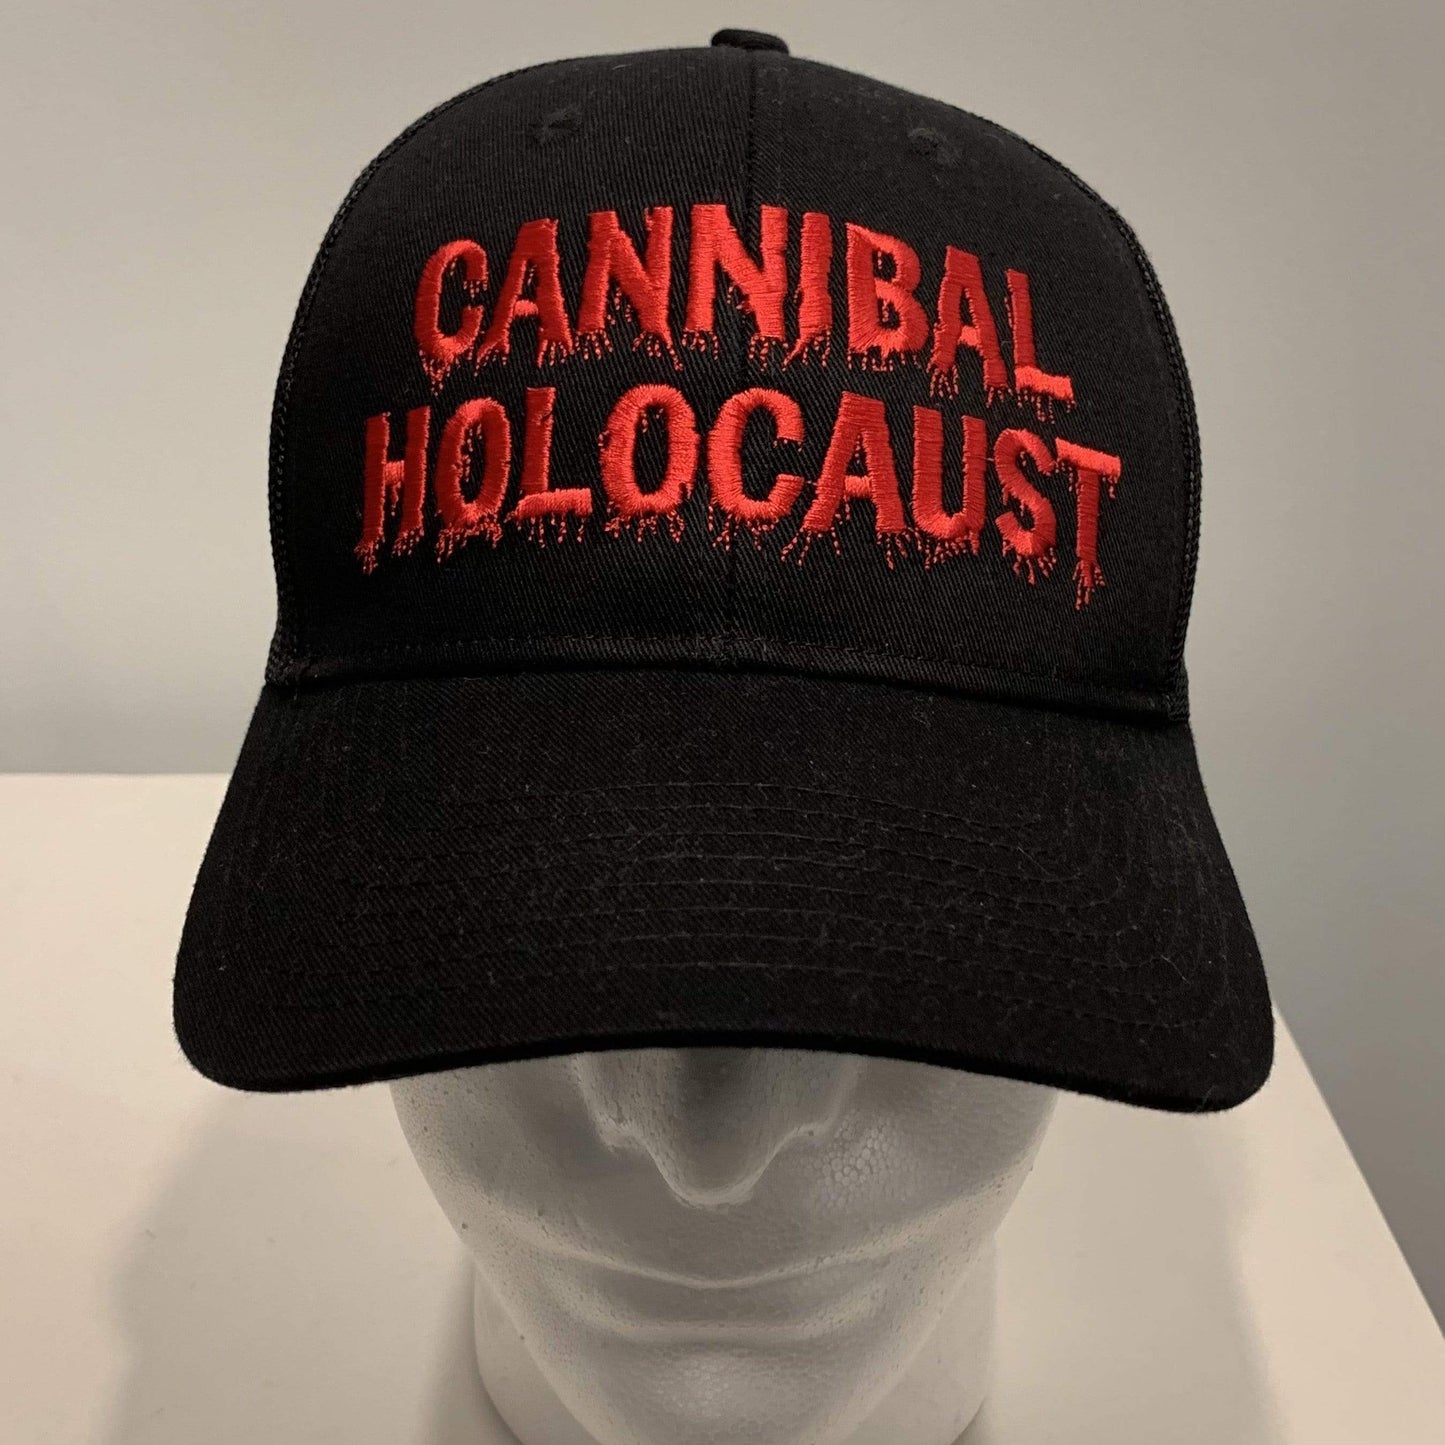 CANNIBAL HOLOCAUST: Trucker hat